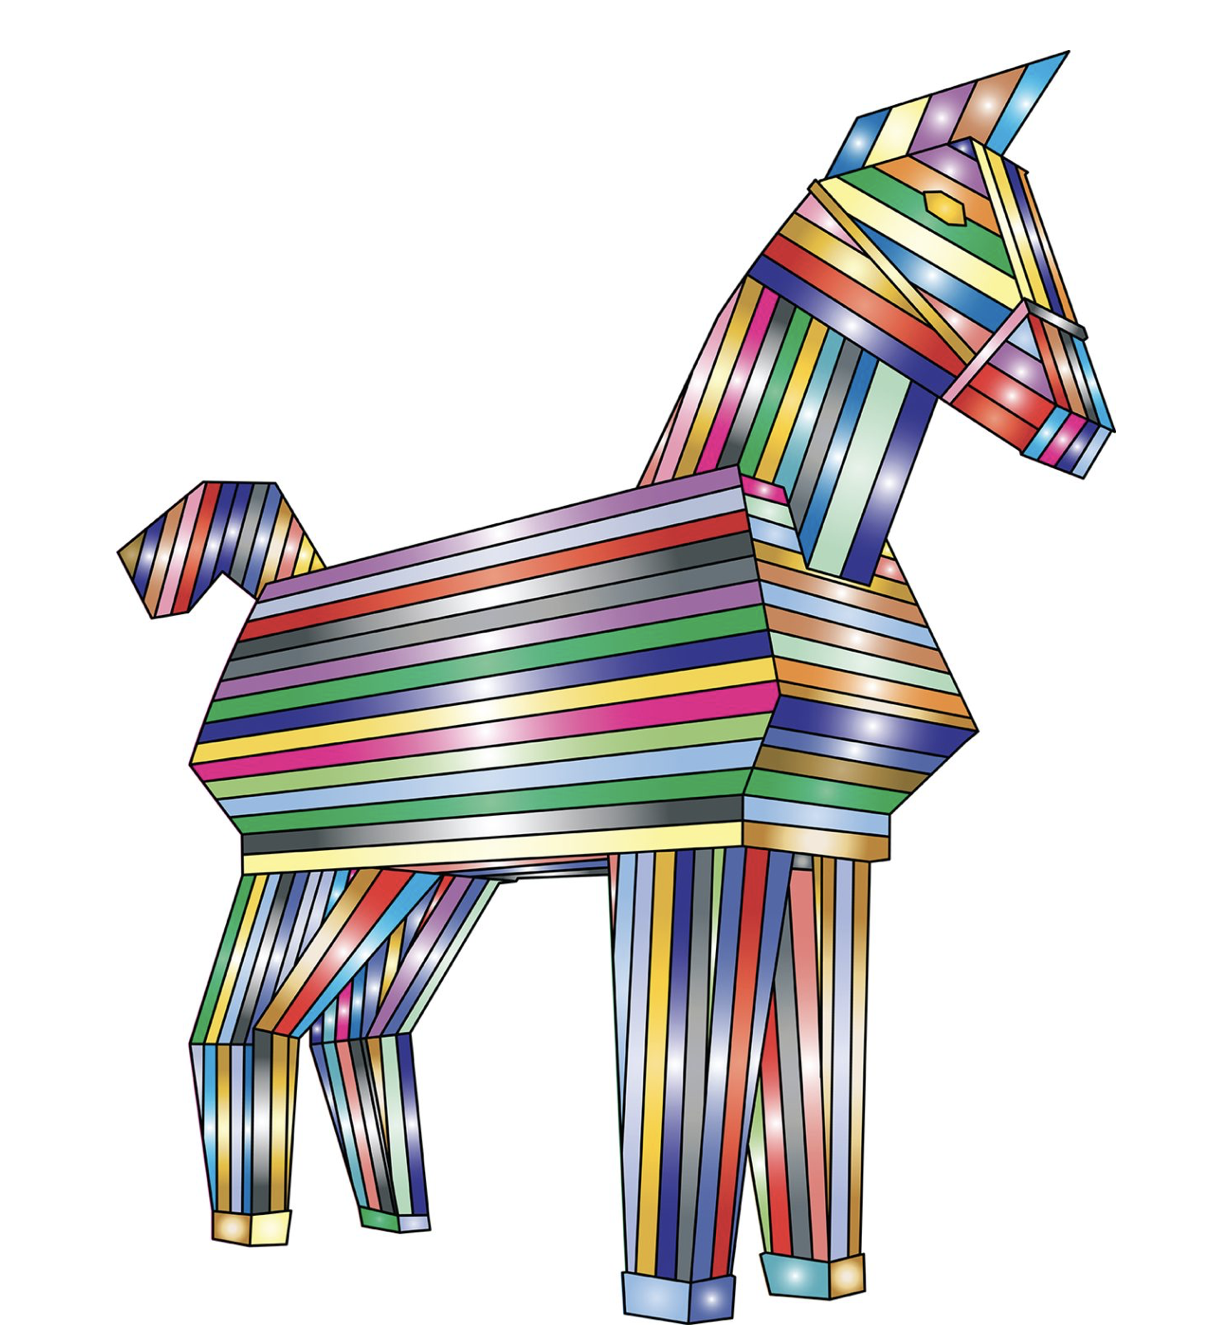 Trojan Horse made of rainbow colored blocks